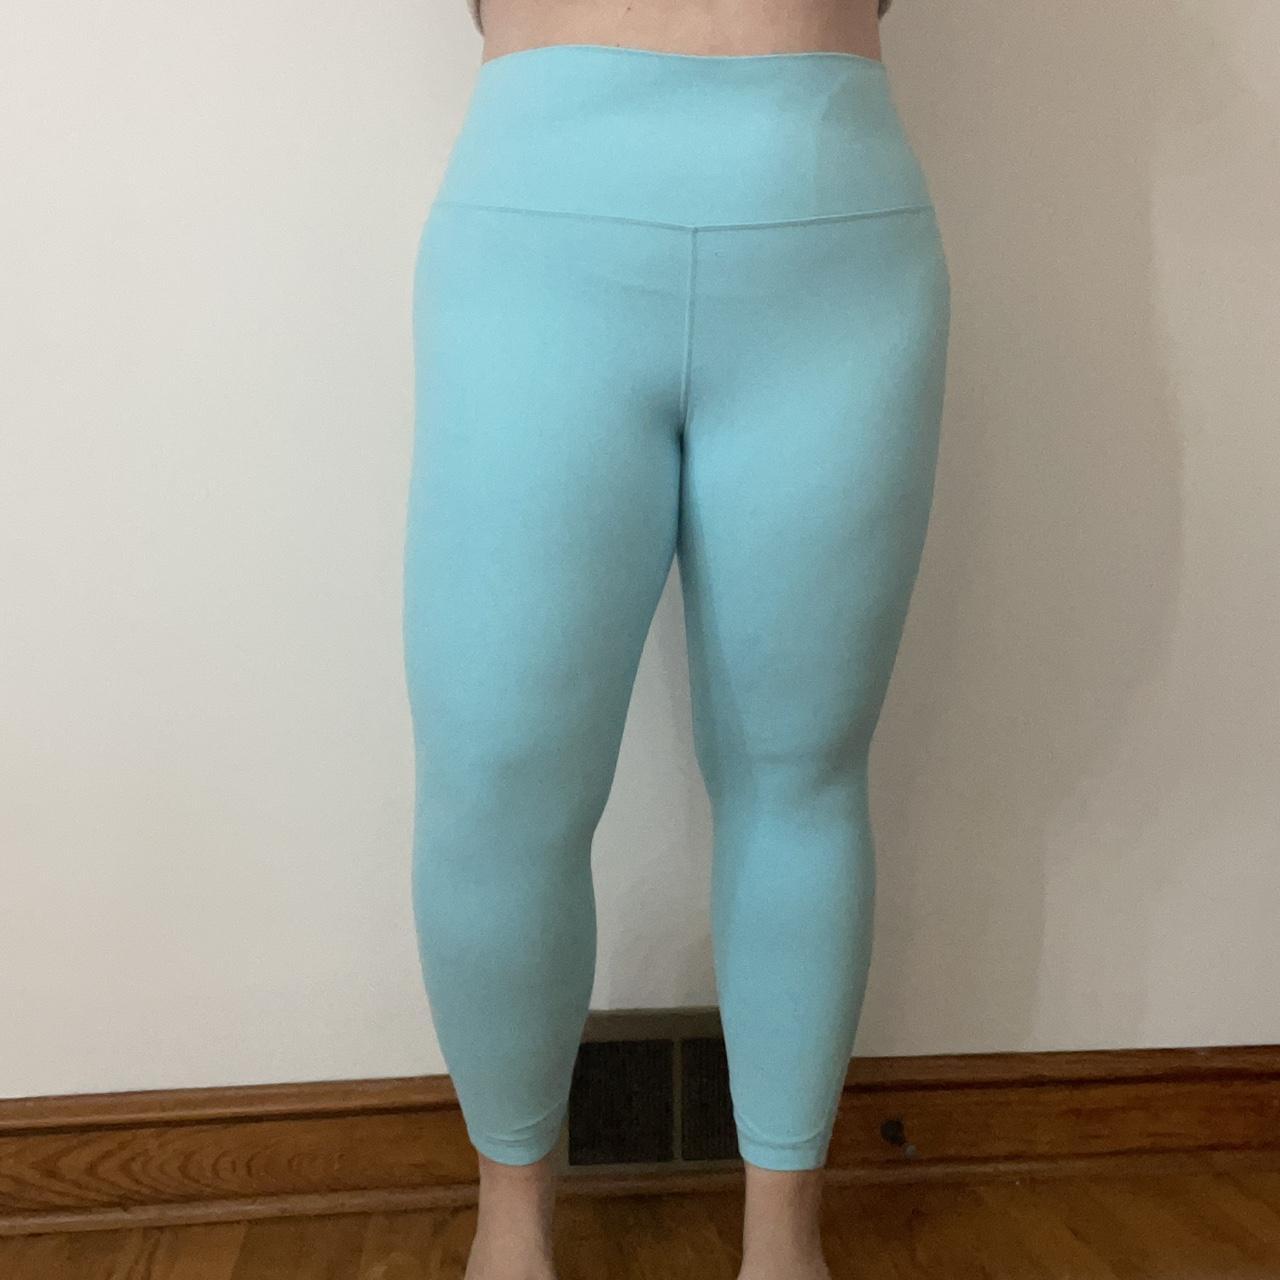 blue lululemon leggings size 14! some minor flaws